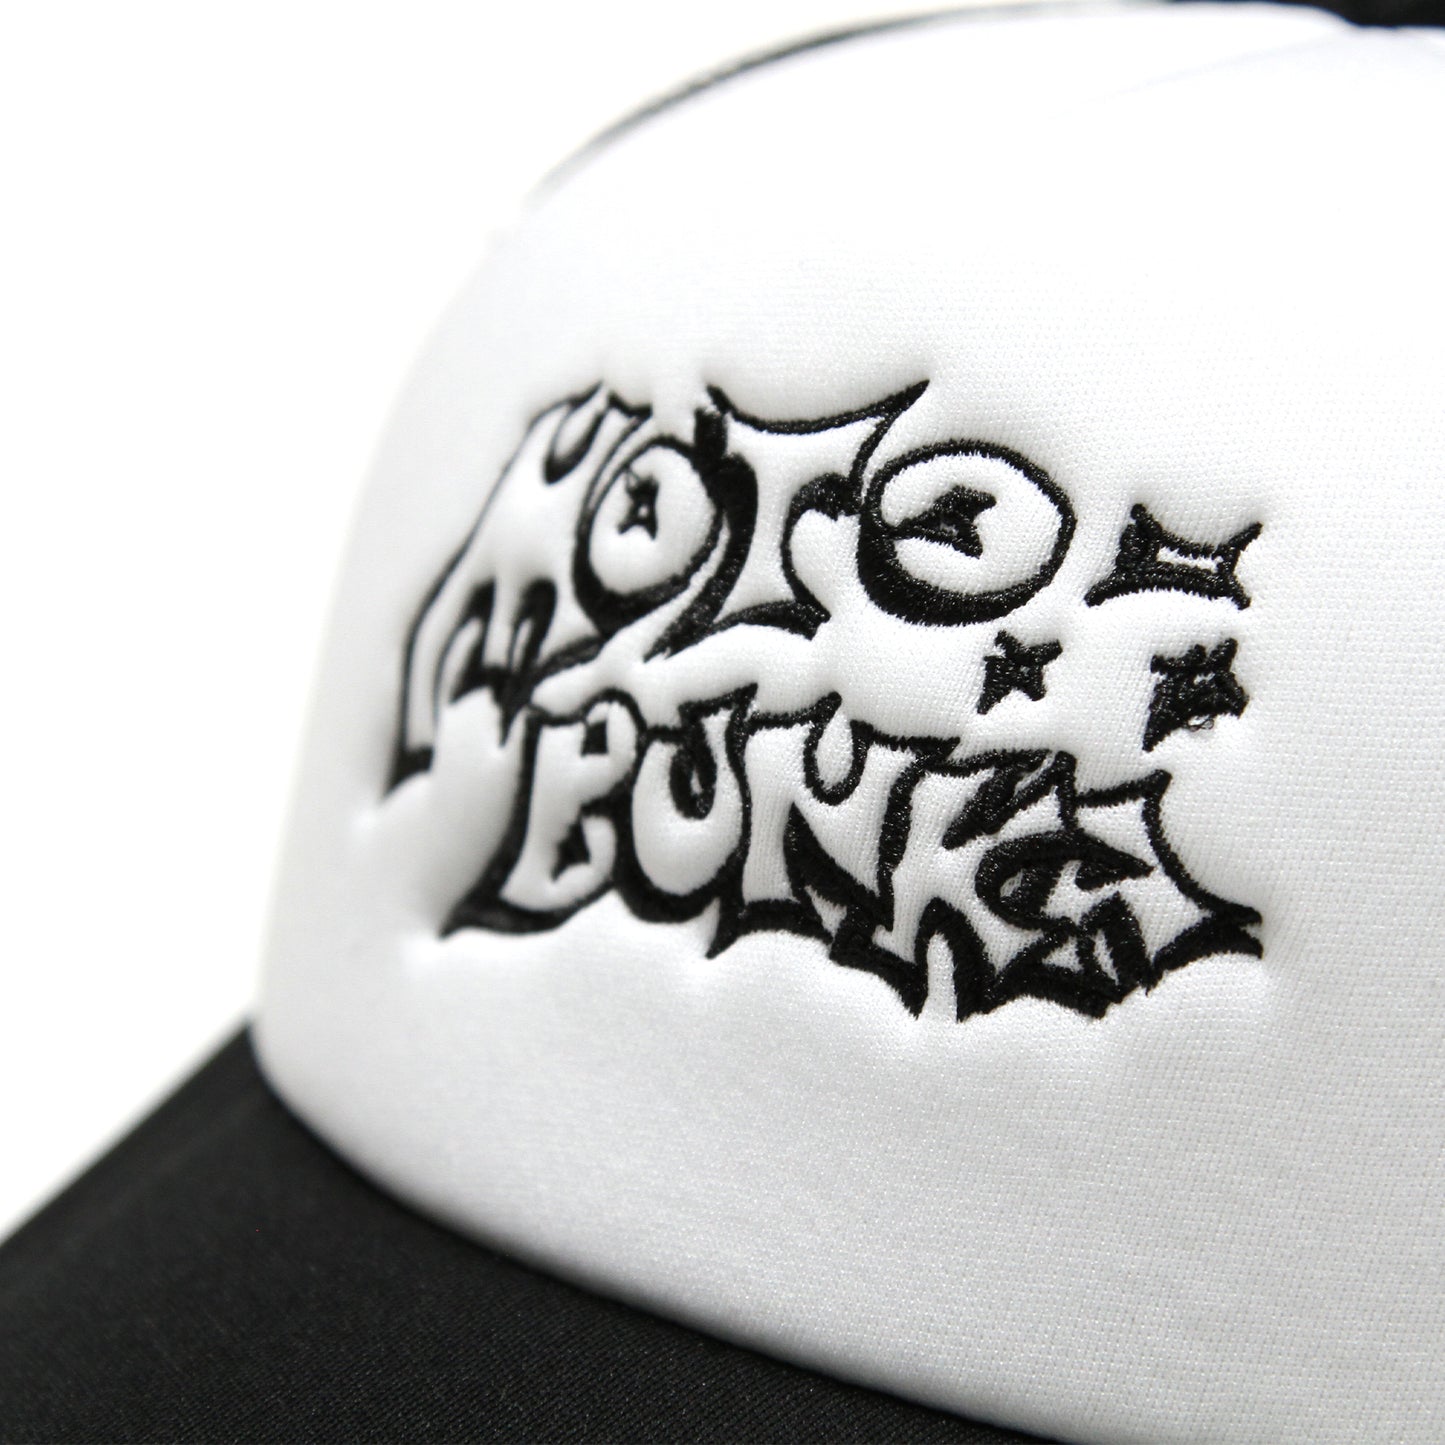 MOTO-BUNKA - Summer Logo Mesh Cap/Black-White